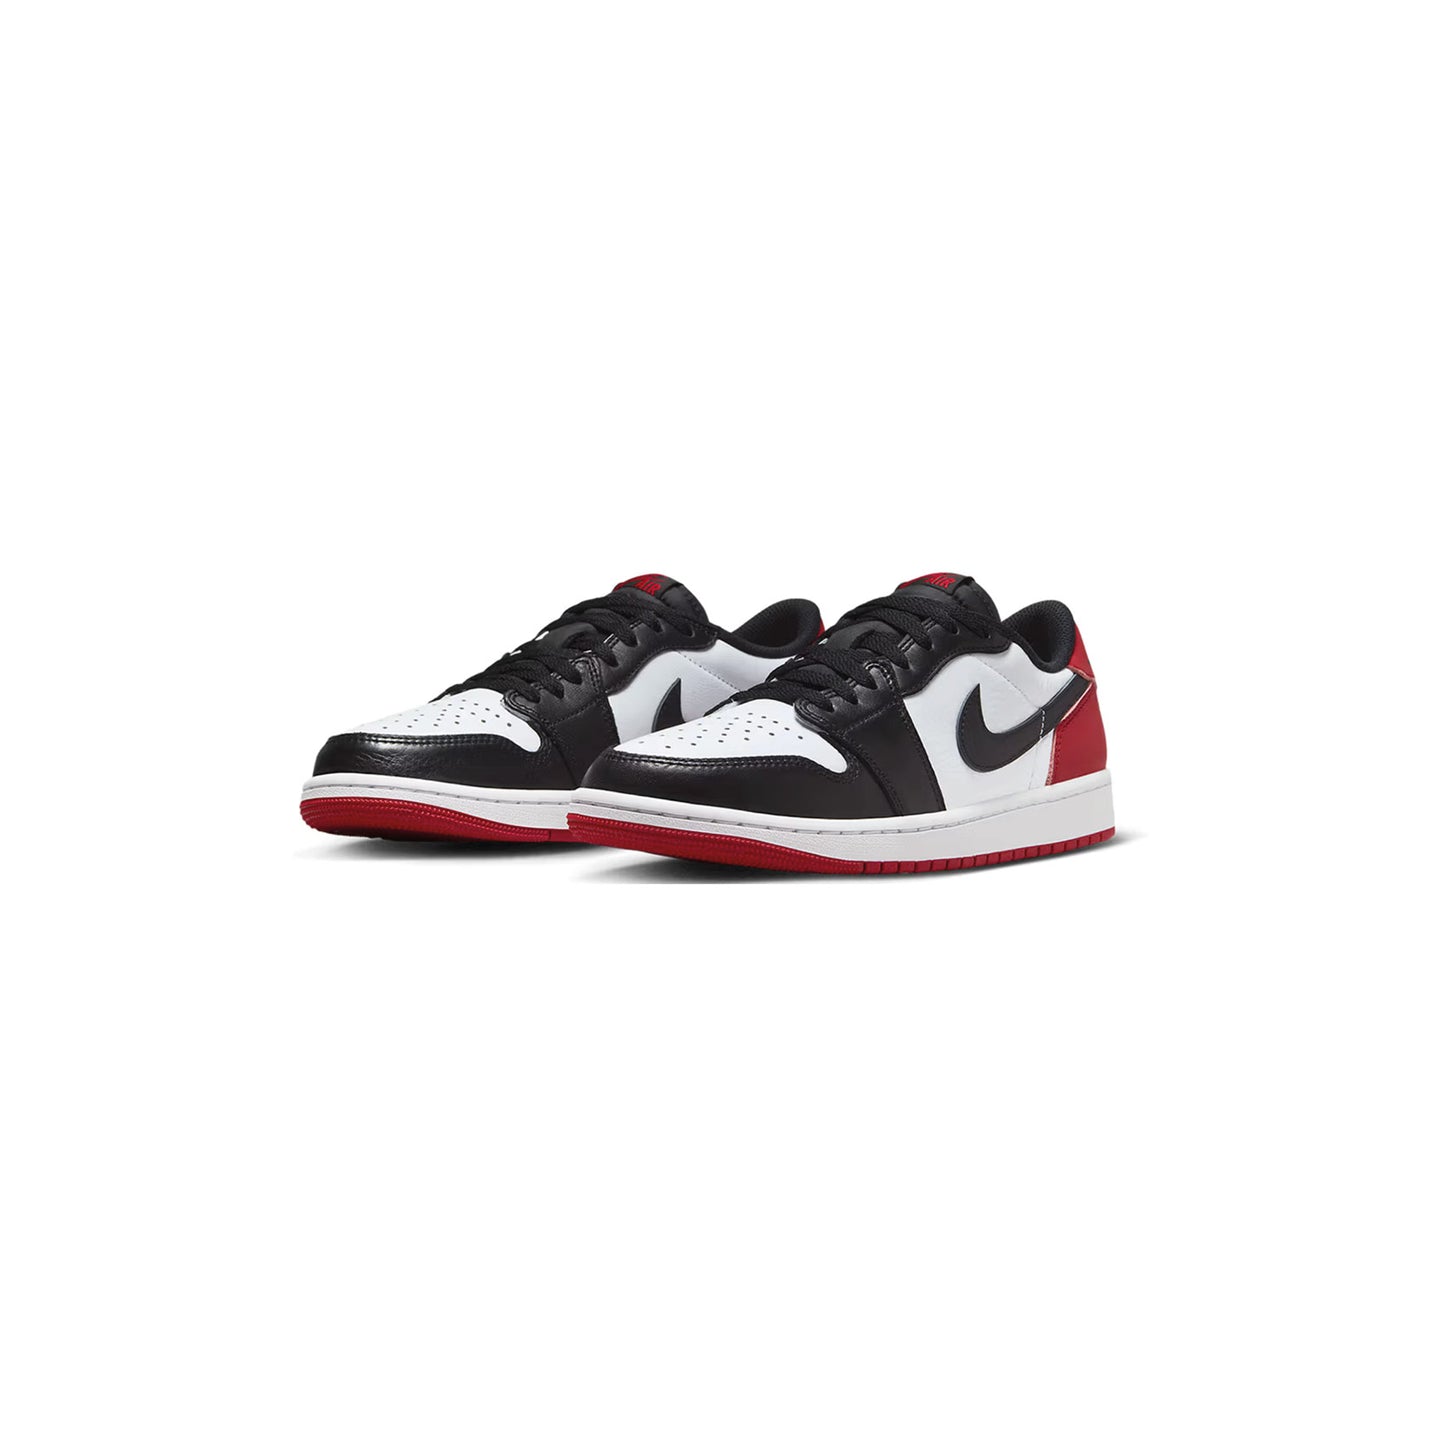 Nike Air Jordan 1 Low 'Black Toe' GS